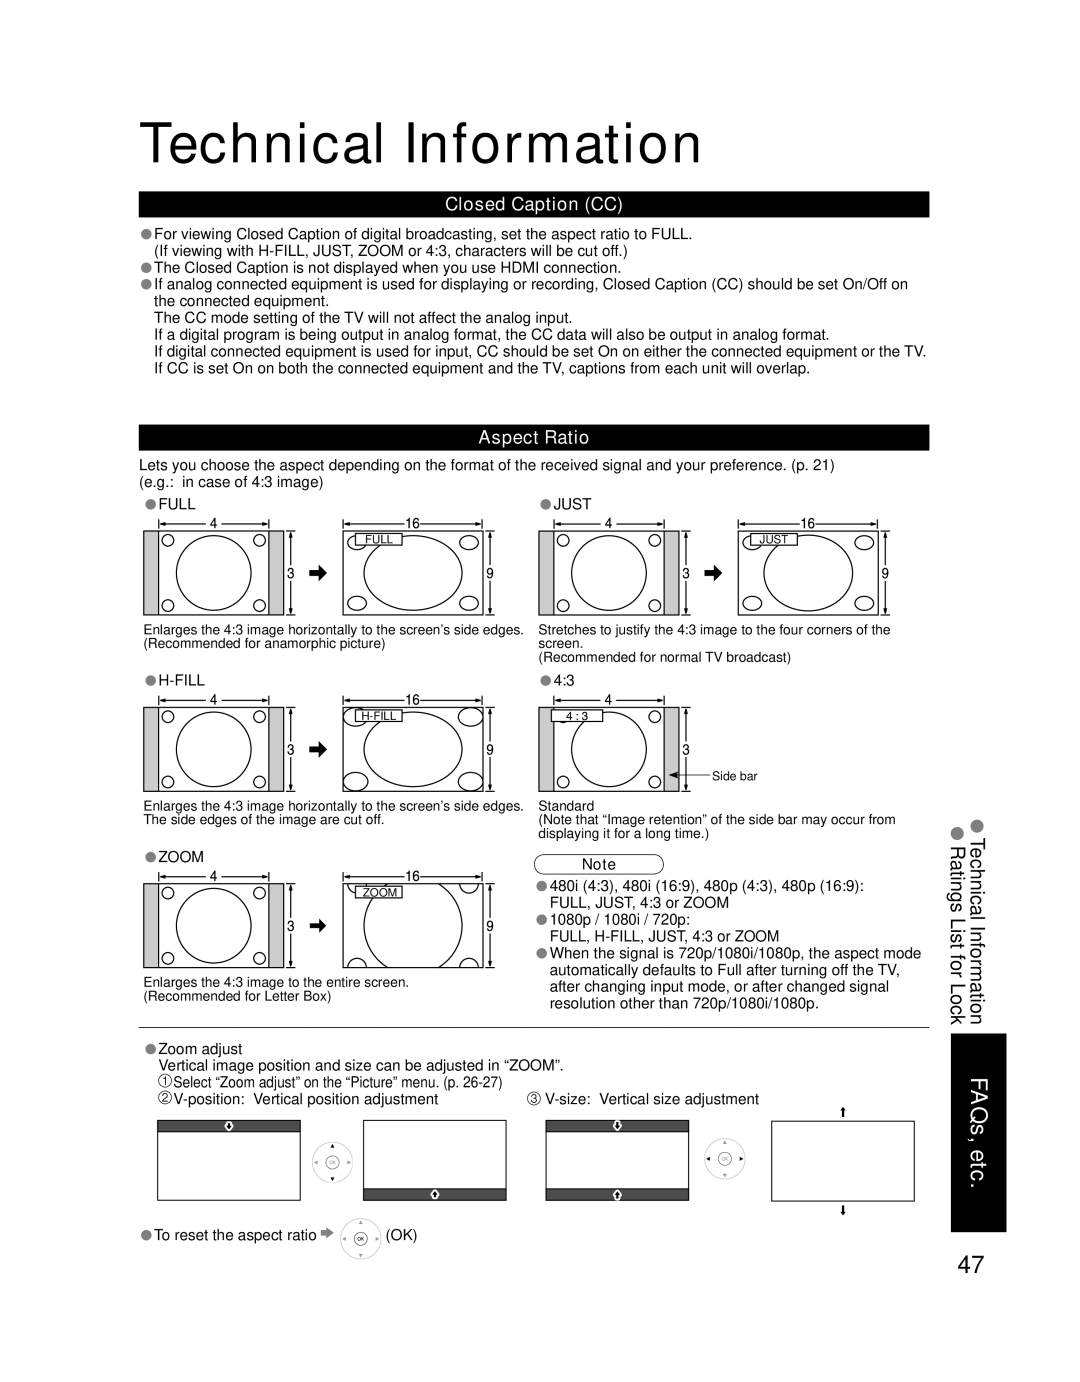 Panasonic TH-42PZ77U, TH-50PZ77U Technical Information, Closed Caption CC, Aspect Ratio, To reset the aspect ratio 